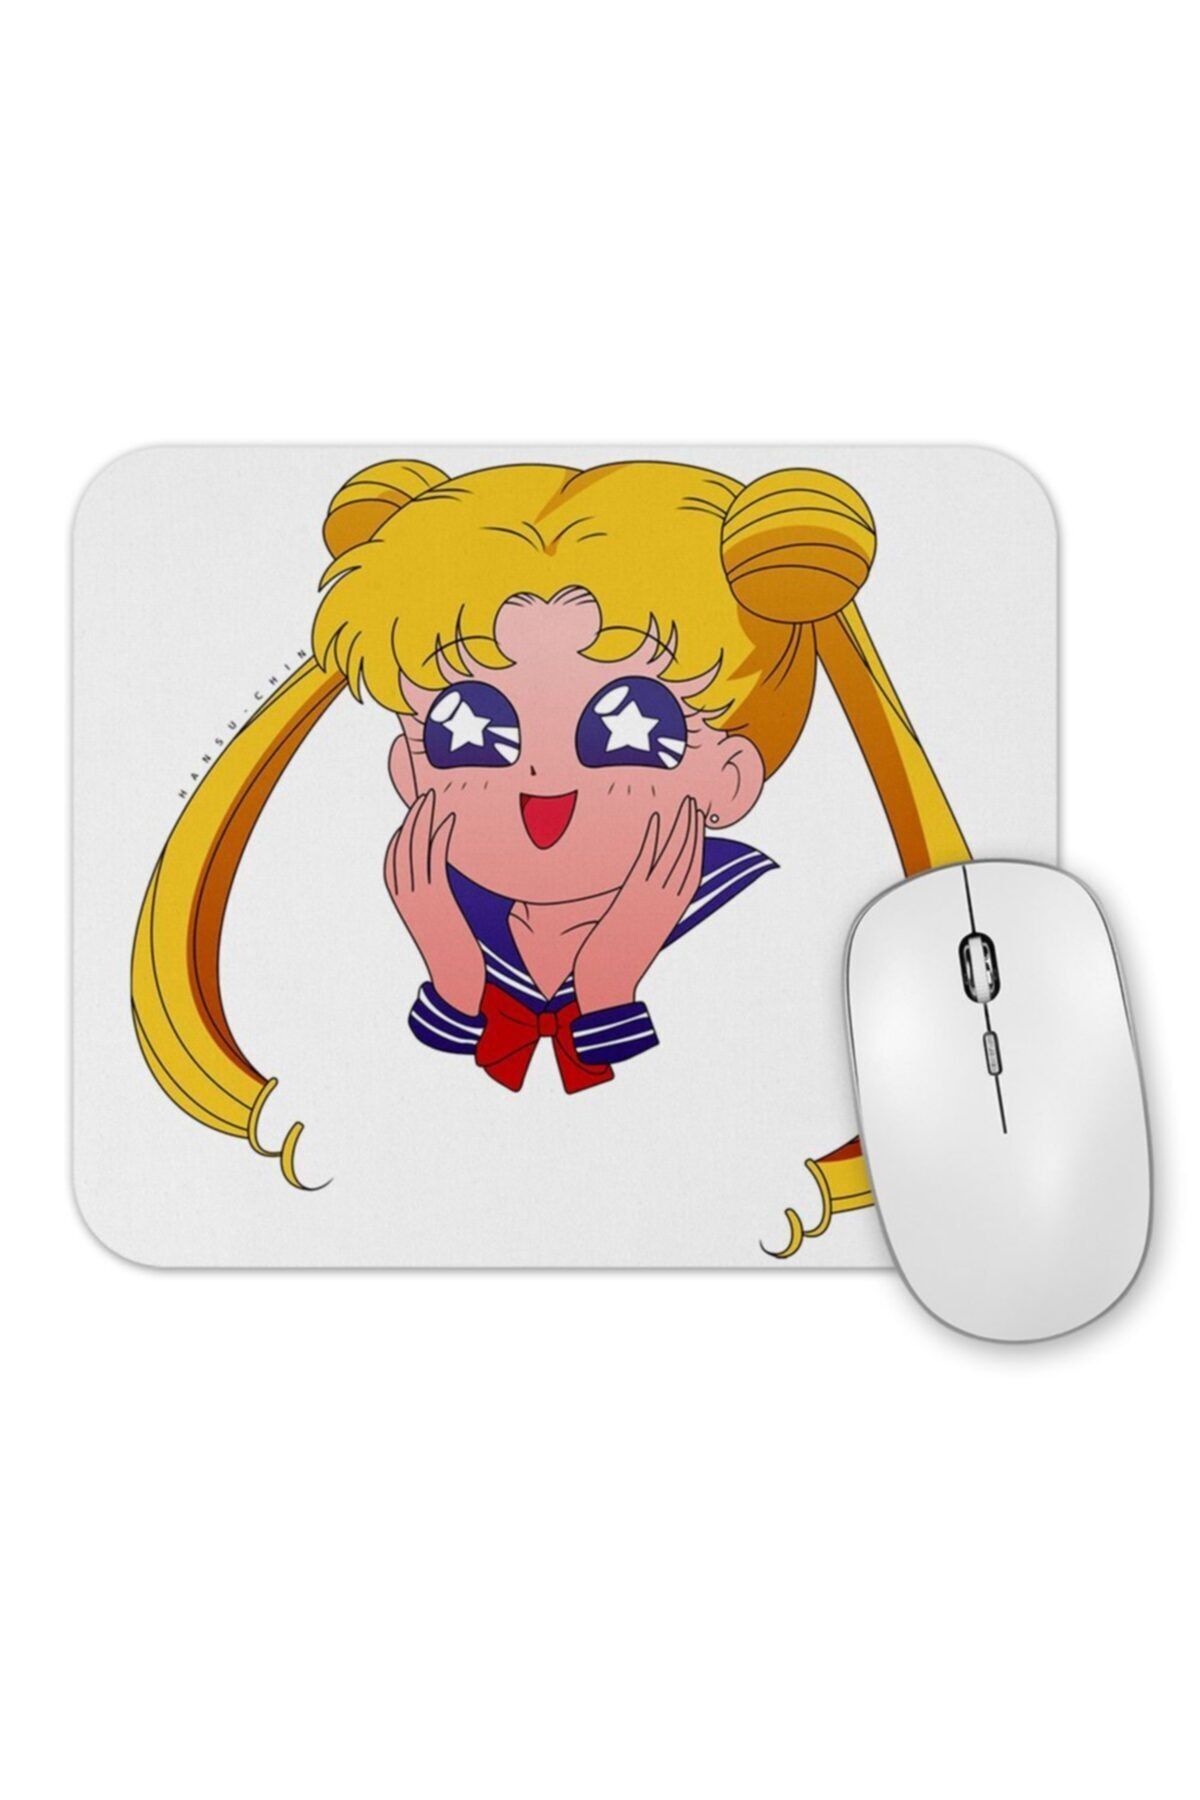 Baskı Dükkanı Articles Sailor Moon Happy Transparent Mouse Pad